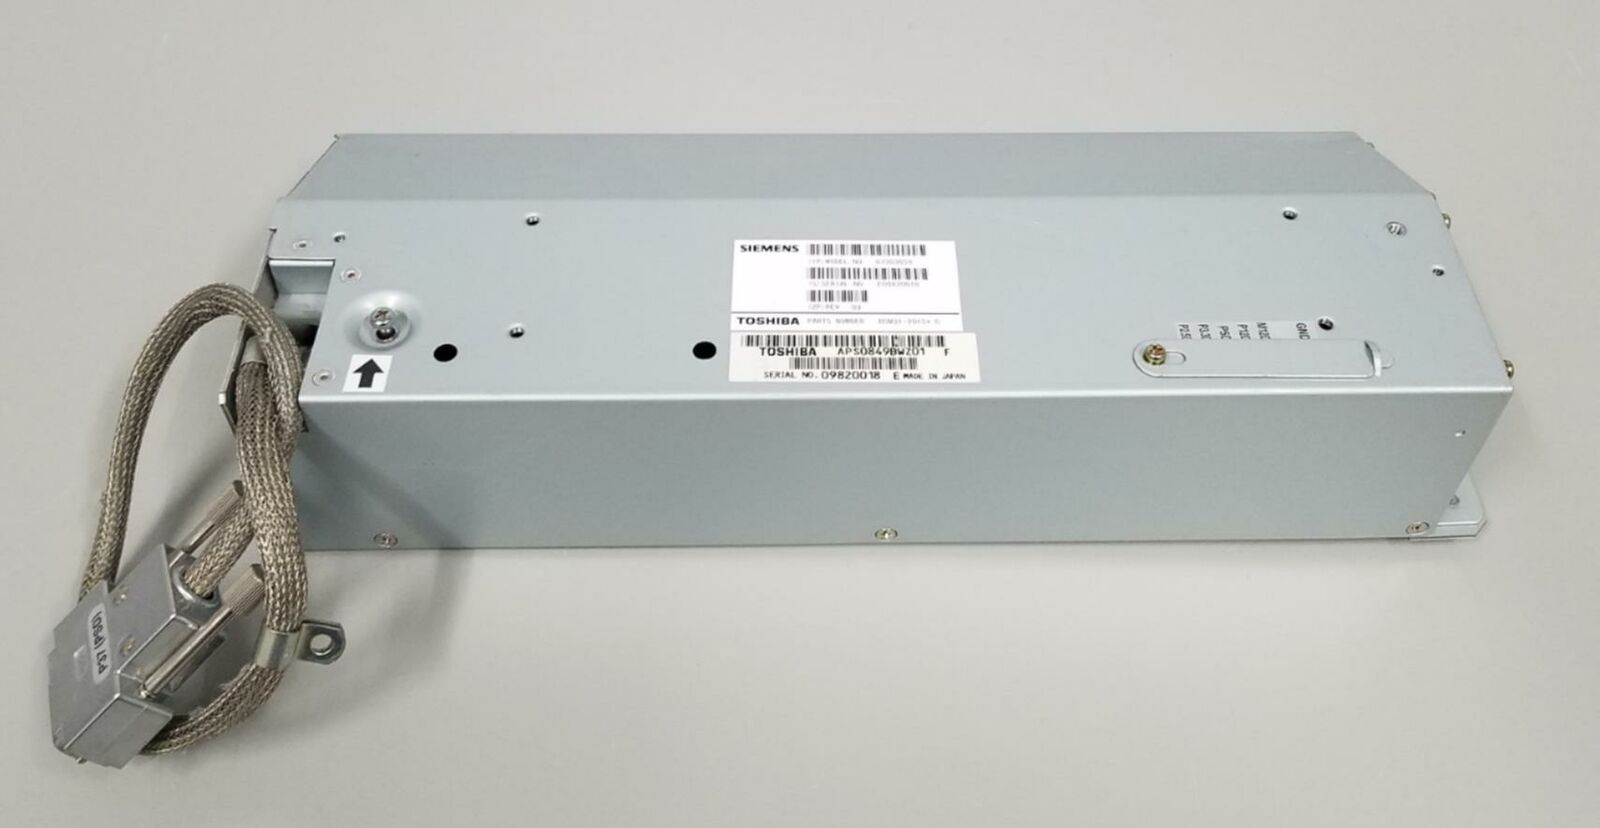 Siemens Ultrasound Acuson S2000 Digital Power Supply 07303659 Rev 03 DIAGNOSTIC ULTRASOUND MACHINES FOR SALE